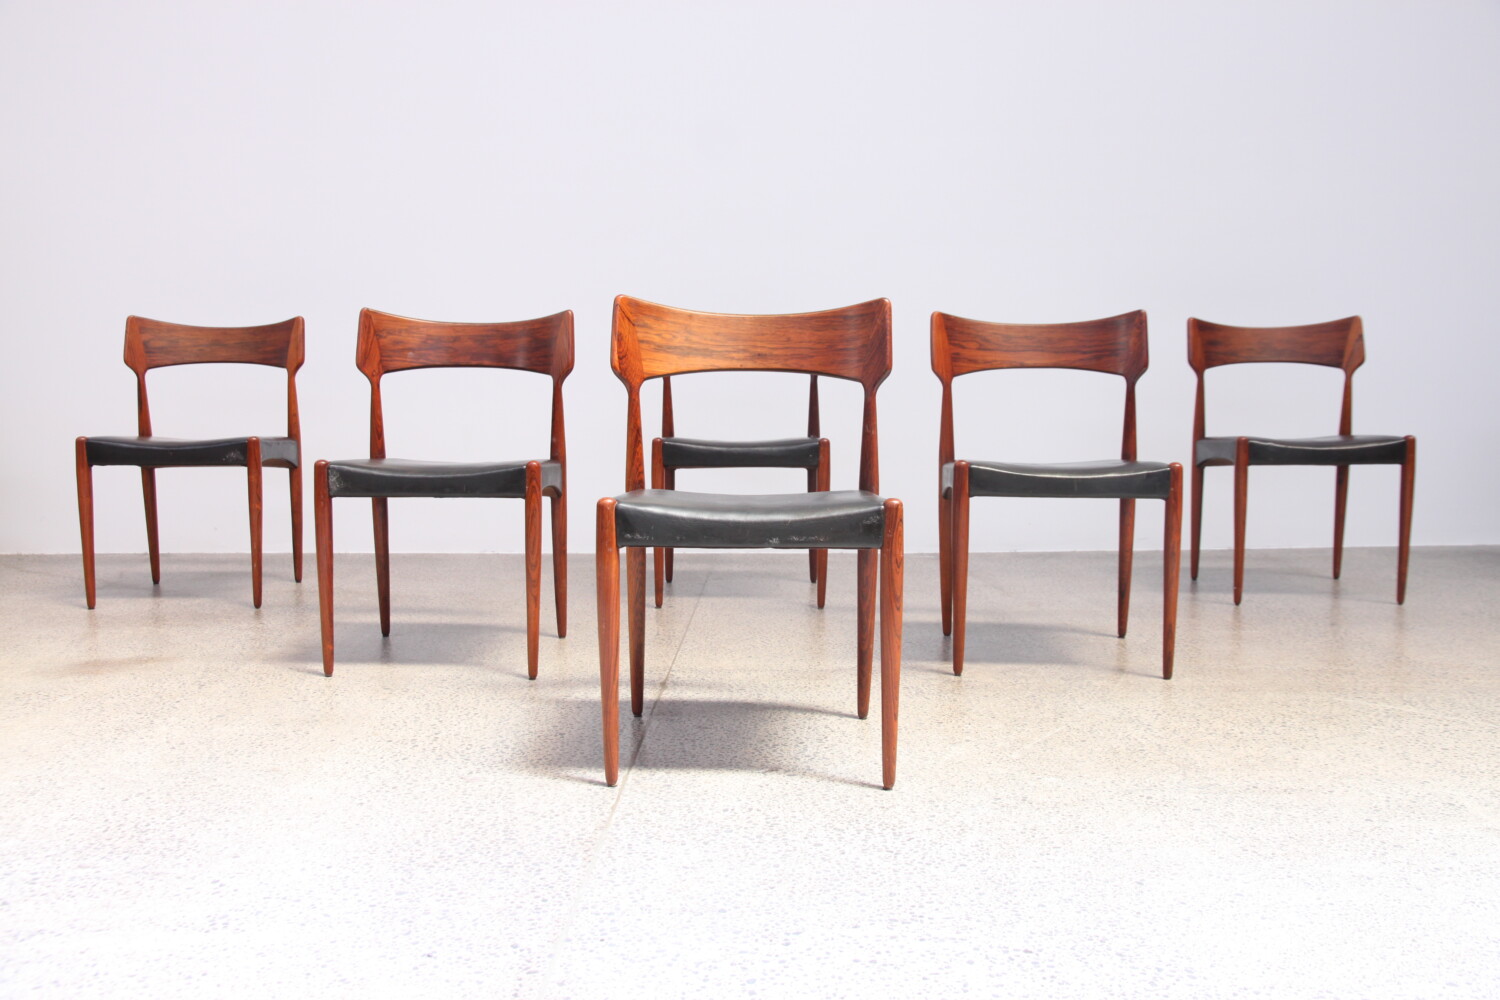 Rosewood Dining Chairs by Bernhard Pedersen